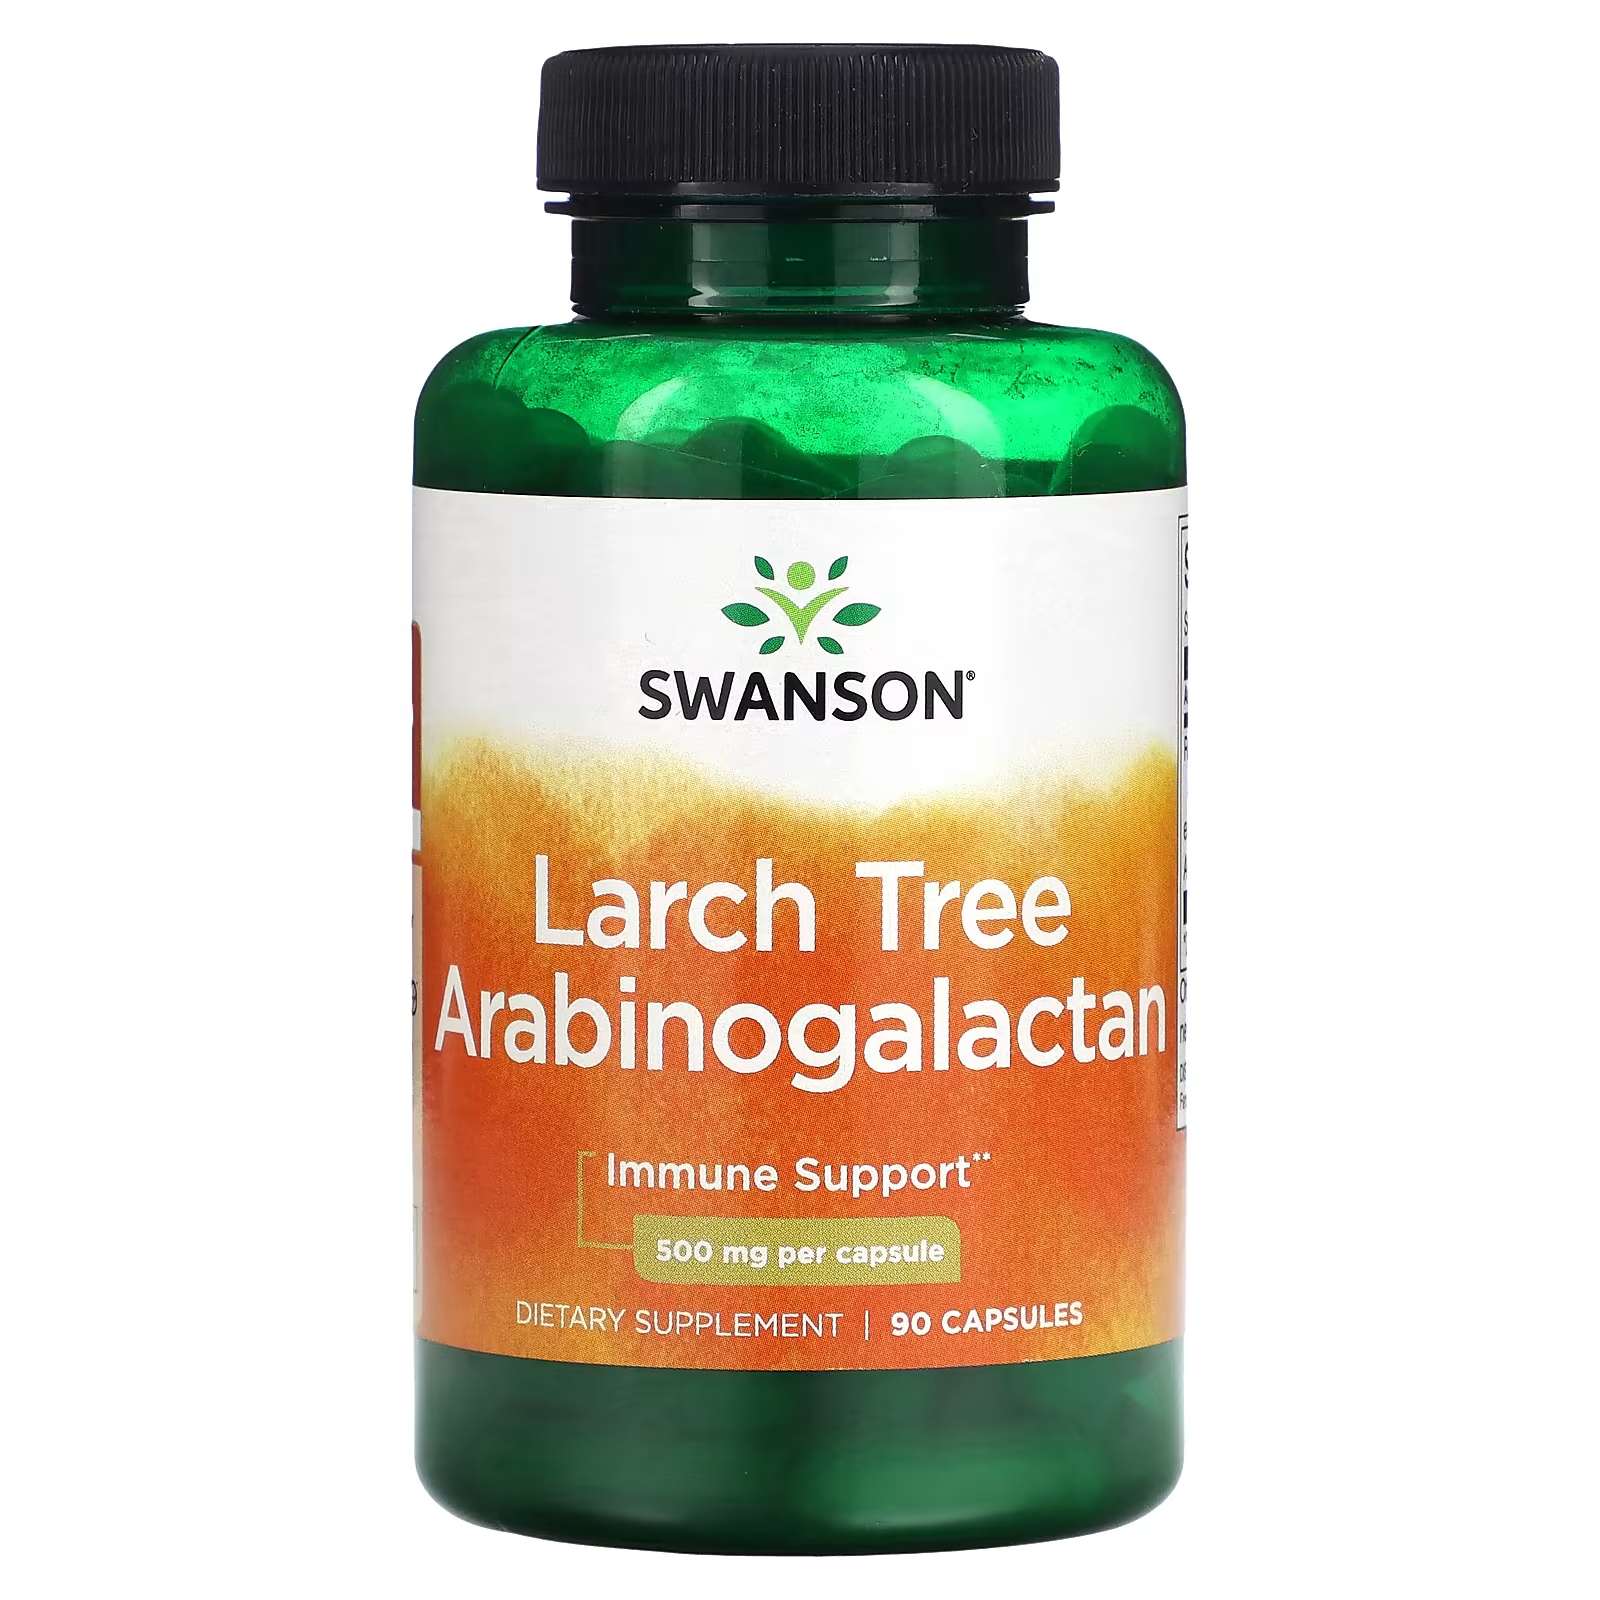 Swanson Larch Tree Арабиногалактан 500 мг 90 капсул swanson арабиногалактан из лиственницы 500 мг 90 капсул